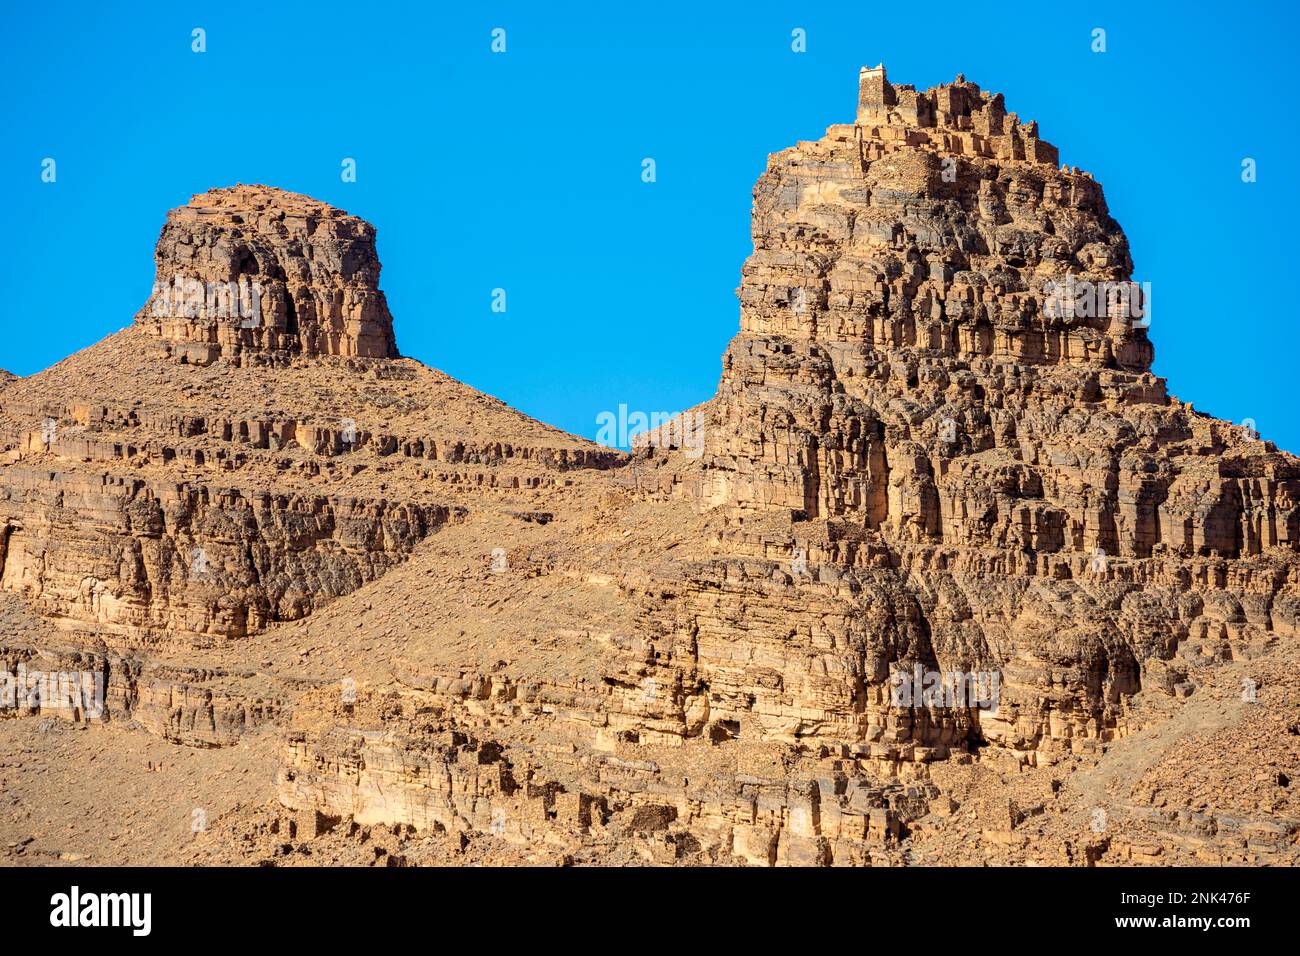 Afrika, Marokko, Südmarokko, Oase Tadakoust, nördlich der Stadt Tata. Agadir auf einem Felsturm. Stockfoto